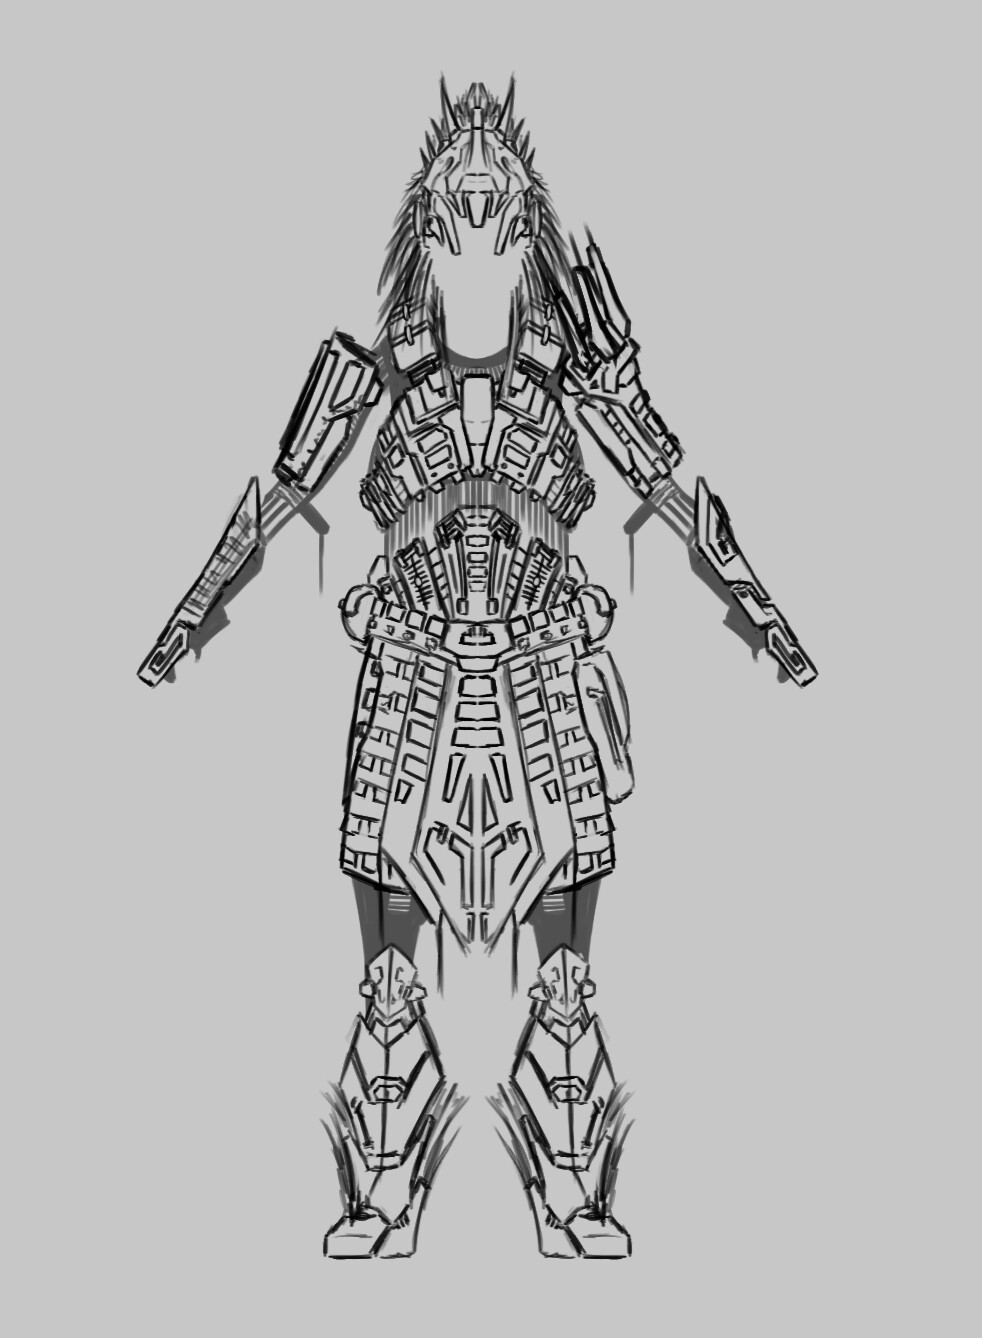 Big brother armor sketch